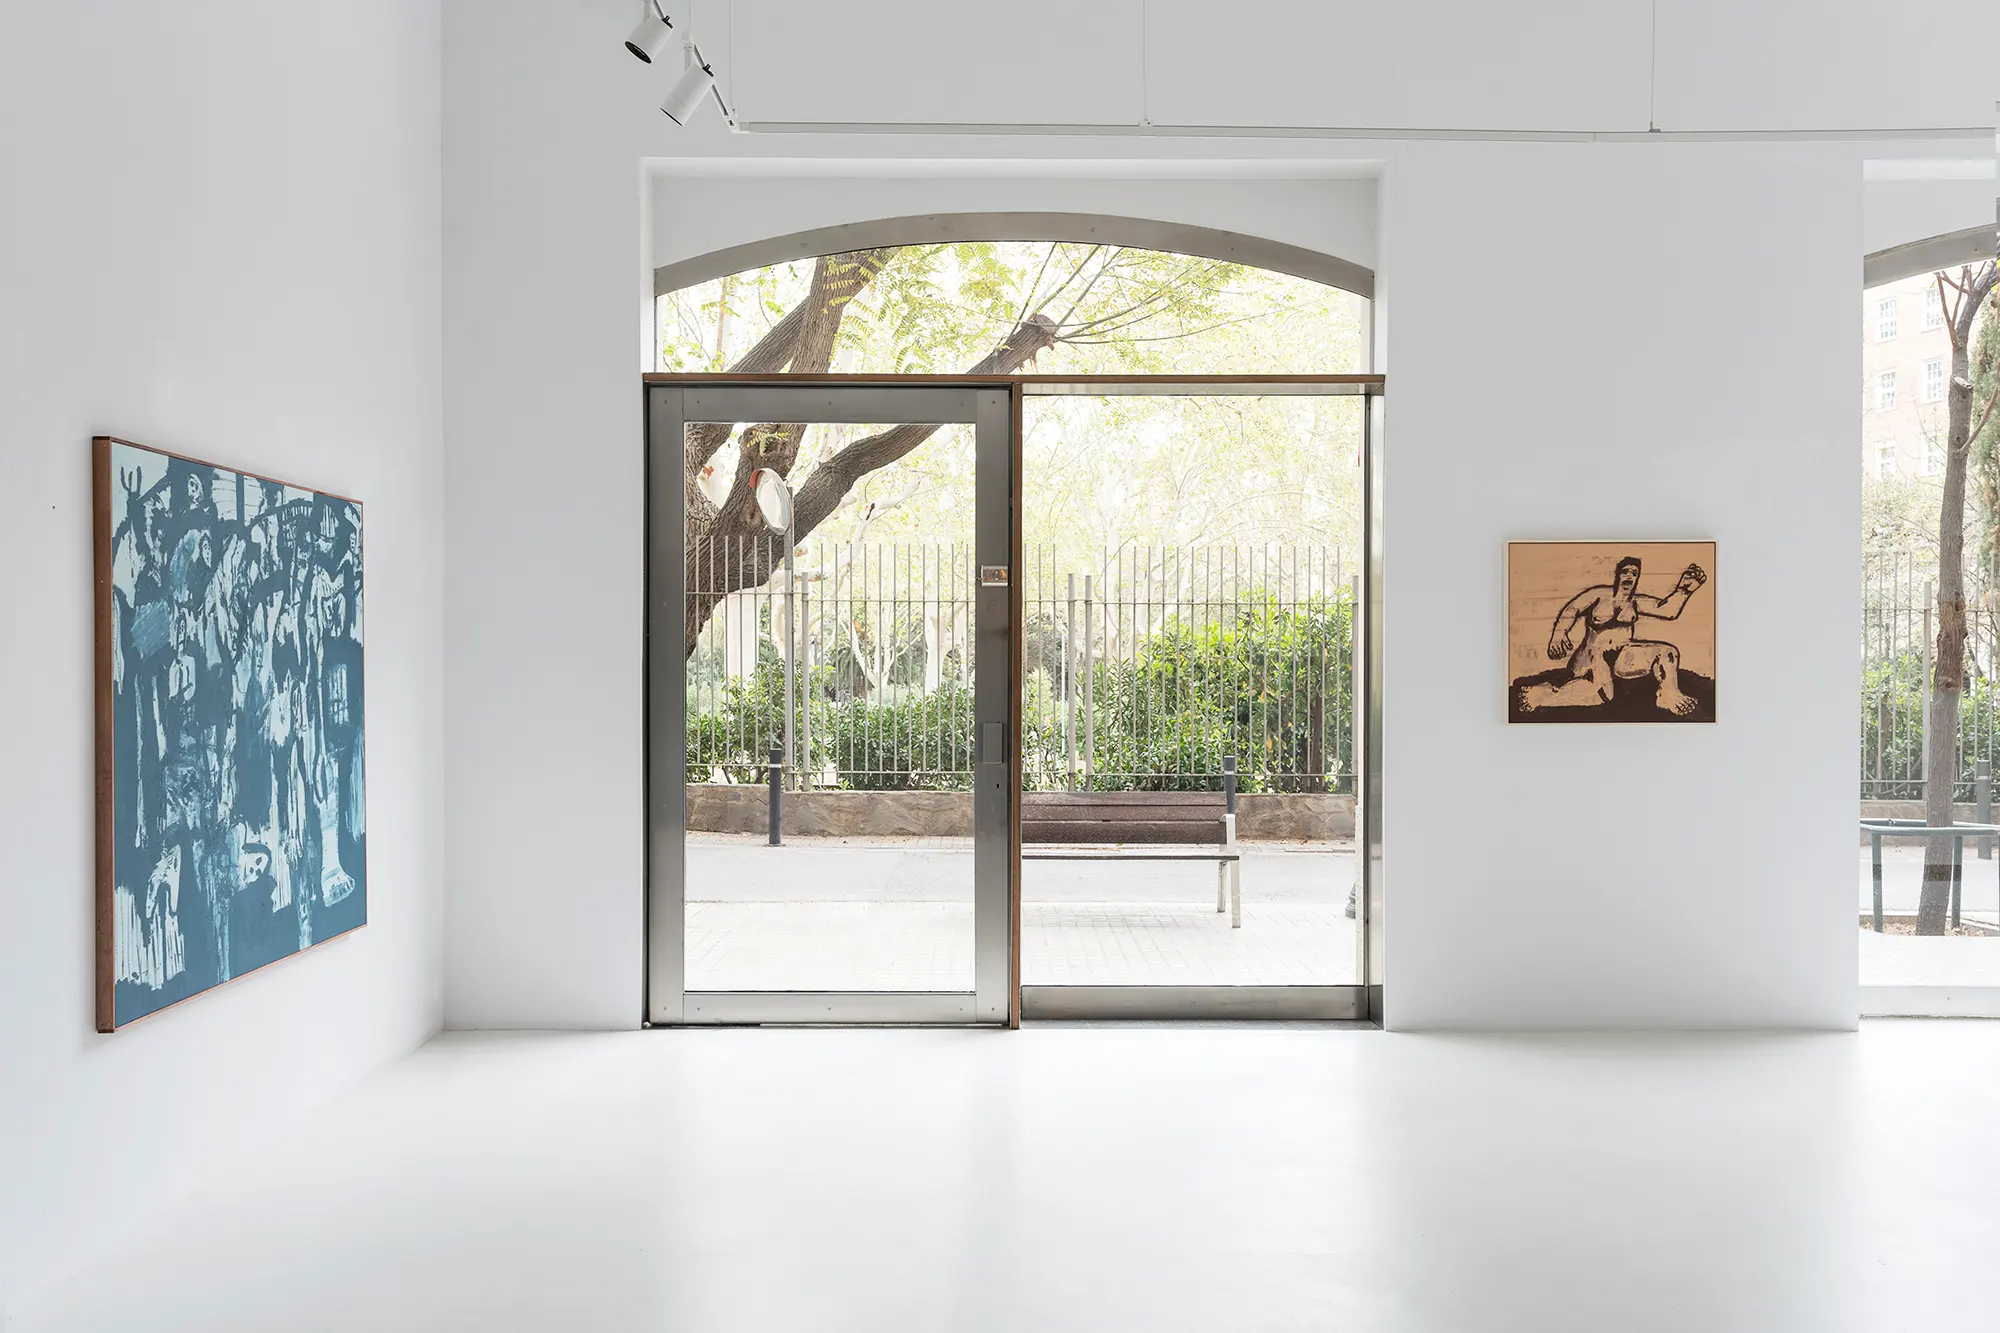 Kottie Paloma's Artistic Journey: His Alzueta Gallery Residency and Solo Exhibition Diary